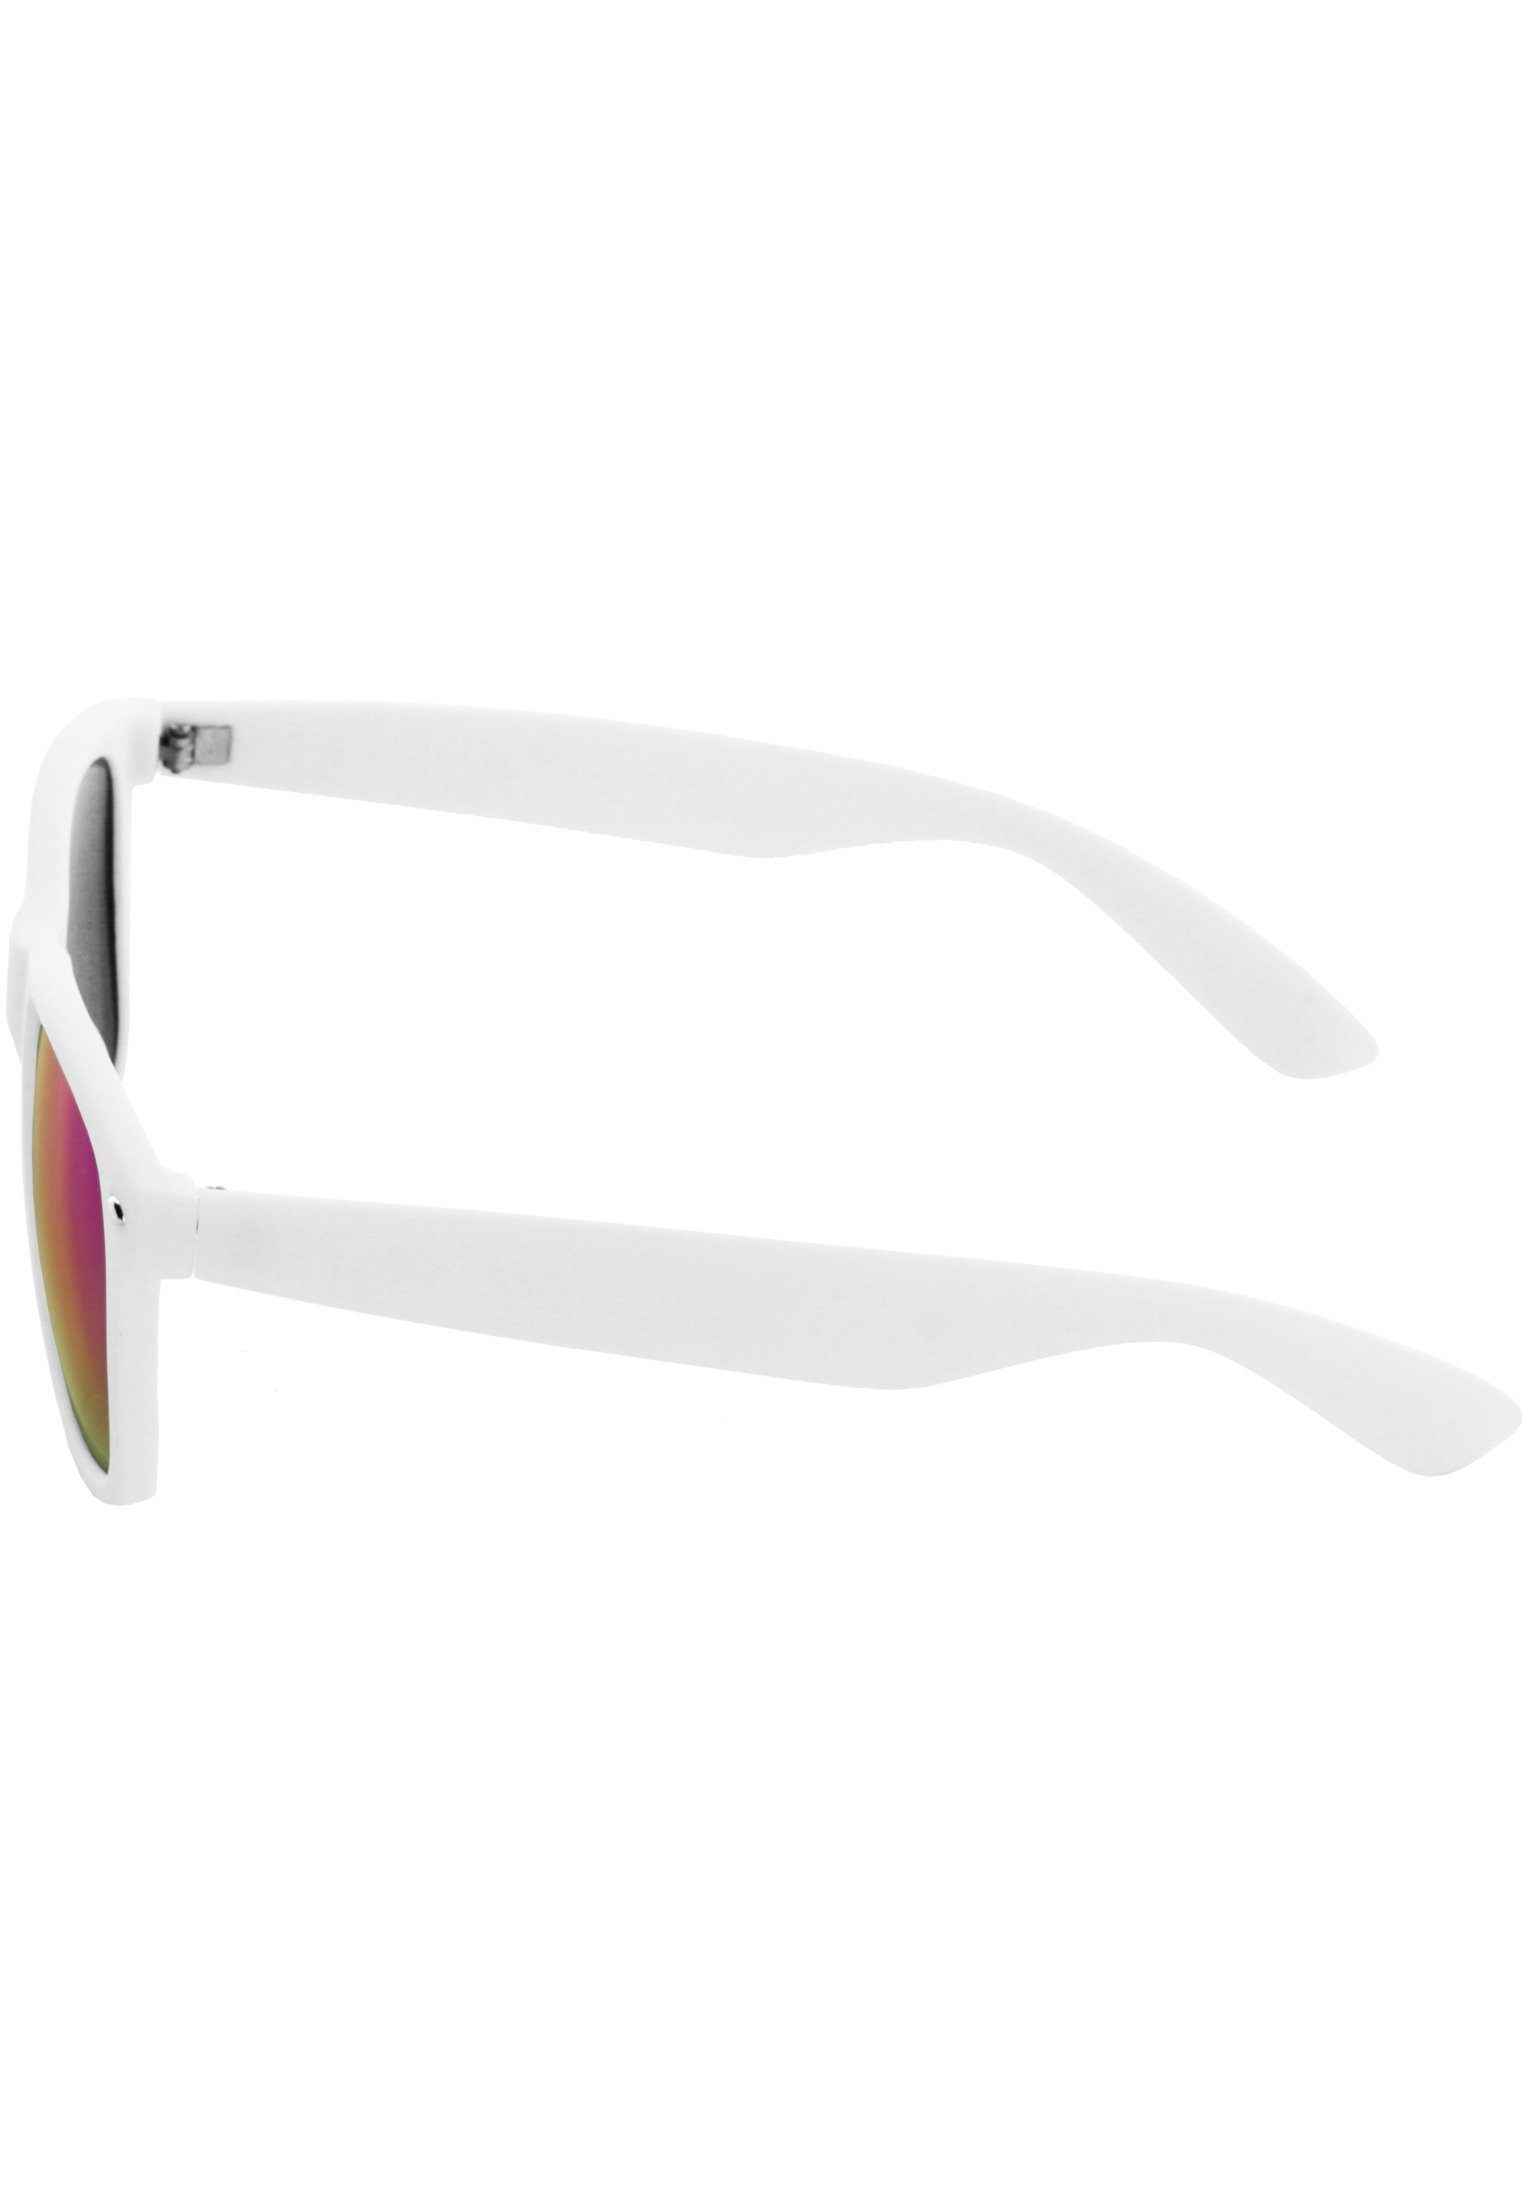 wht/red Sunglasses Likoma Sonnenbrille Accessoires Mirror MSTRDS